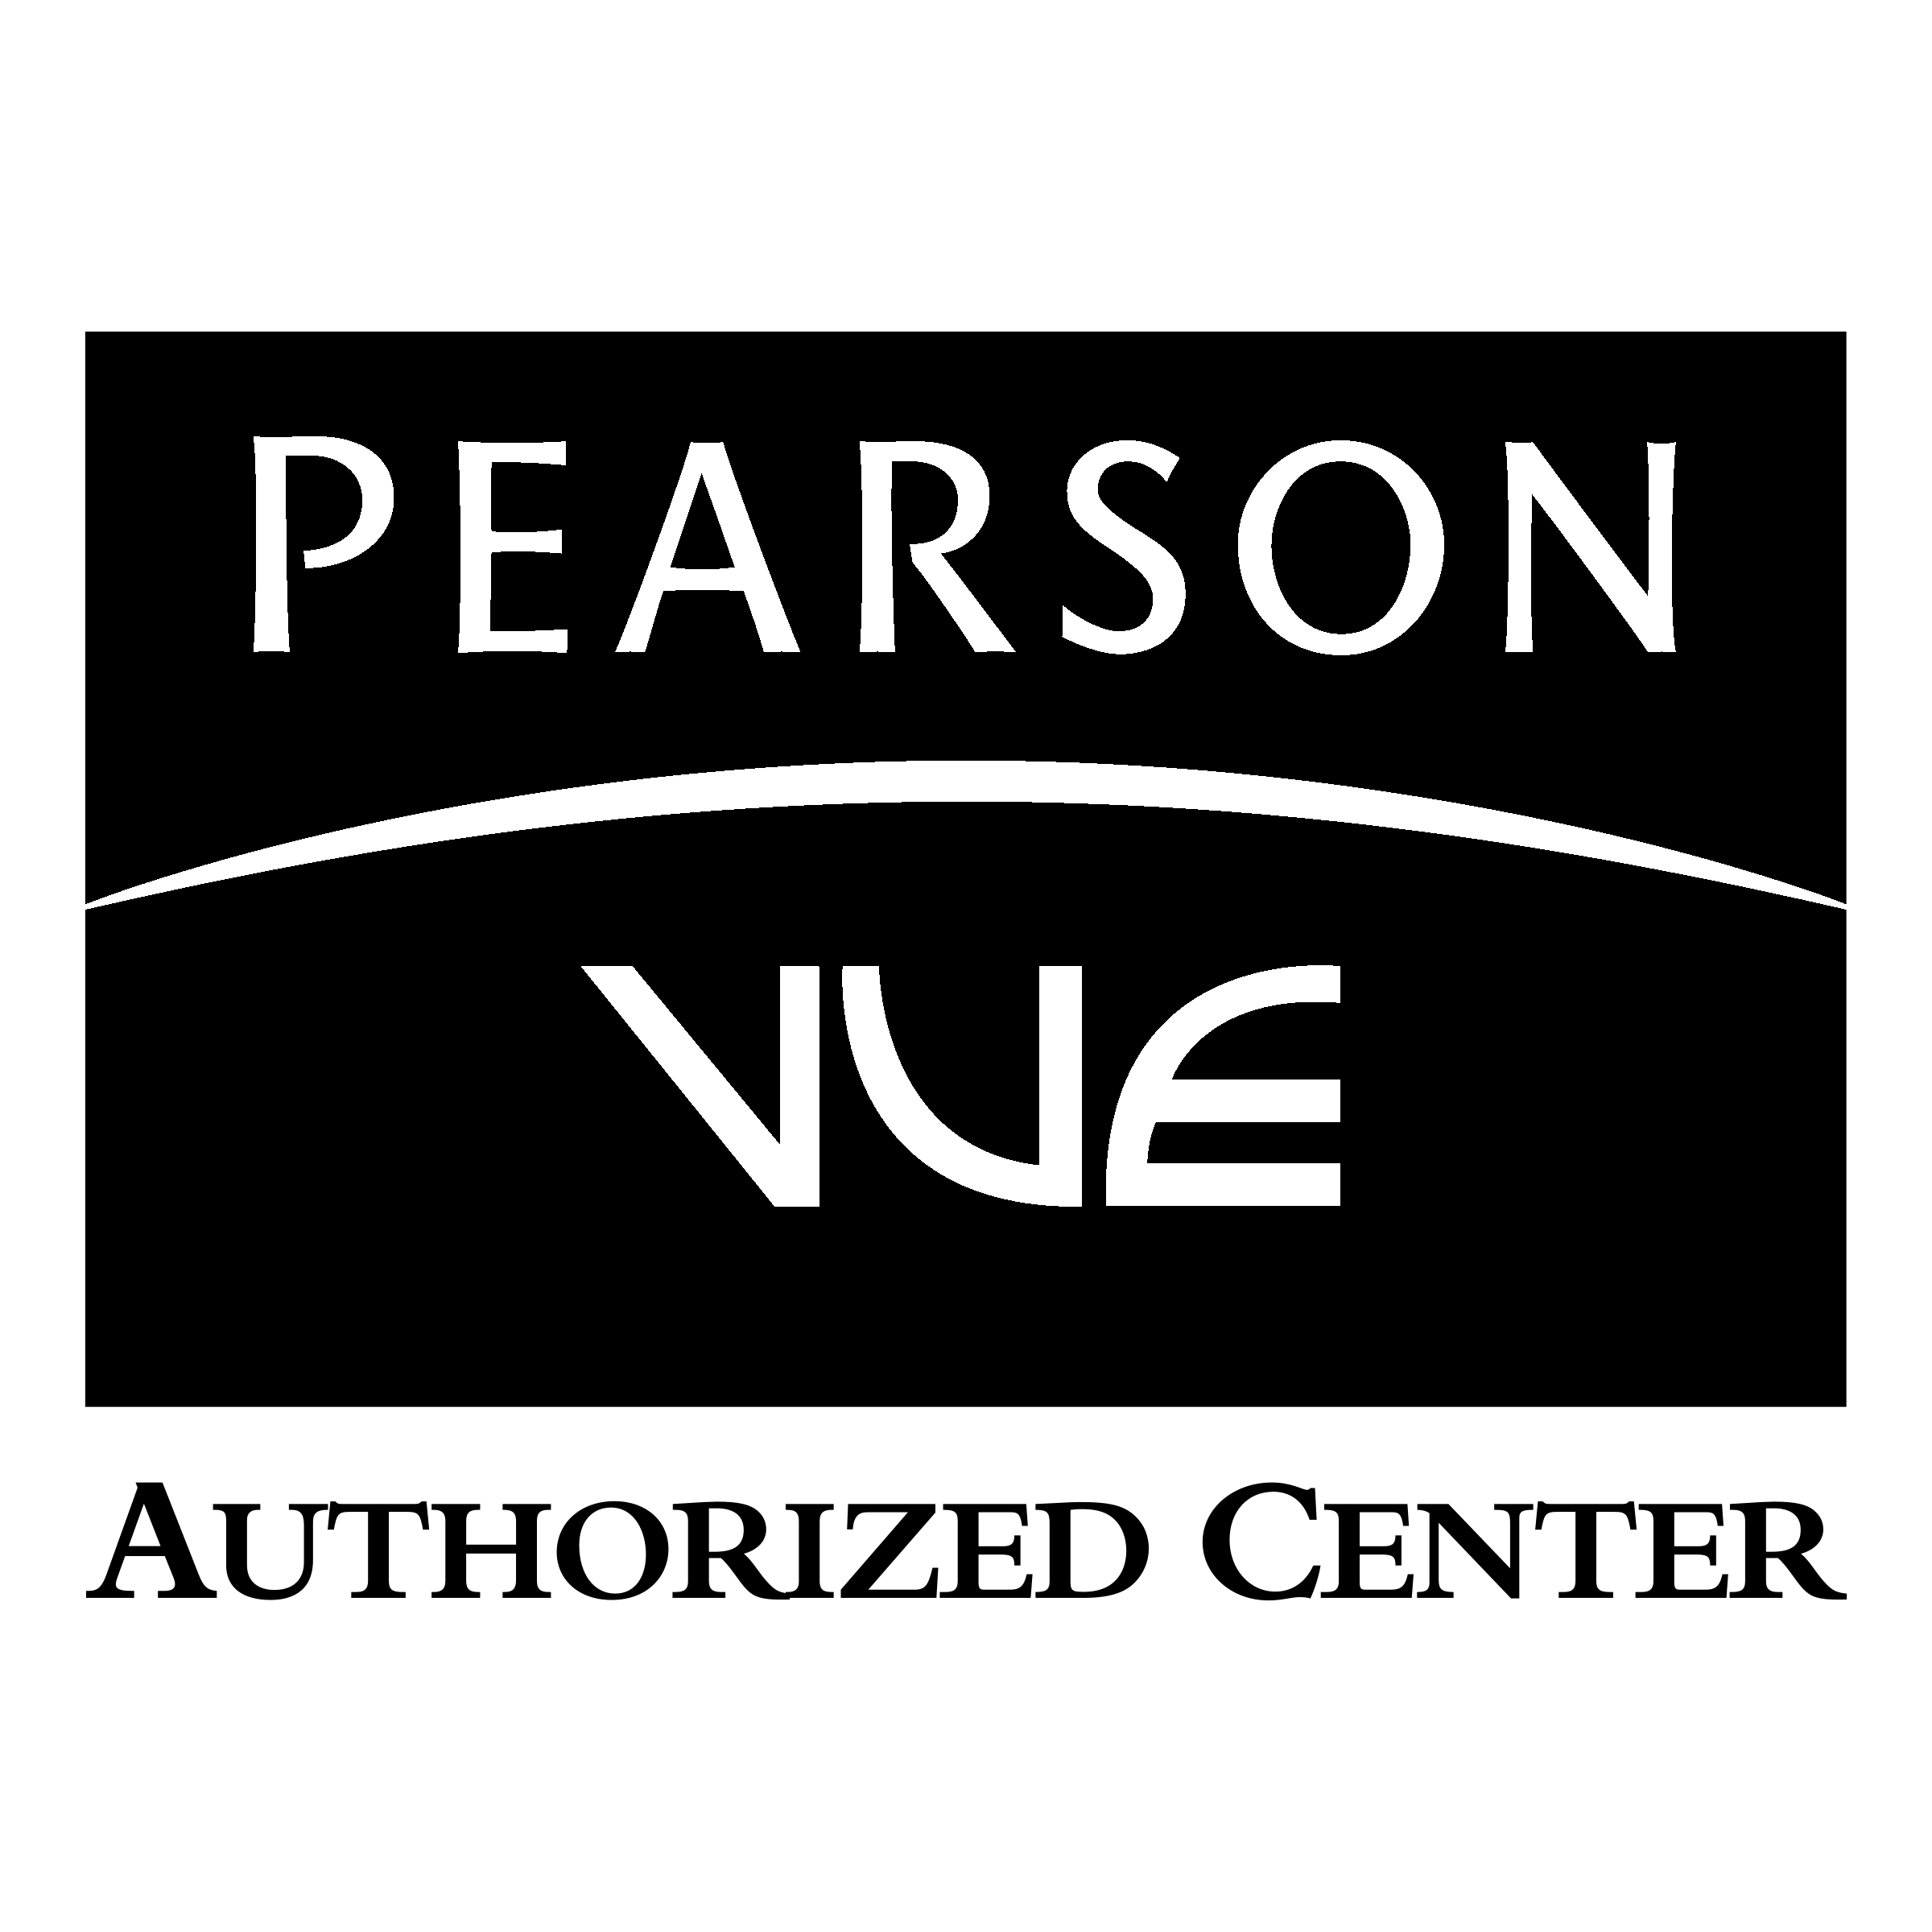 Vue Logo - Pearson VUE Logo PNG Transparent & SVG Vector - Freebie Supply